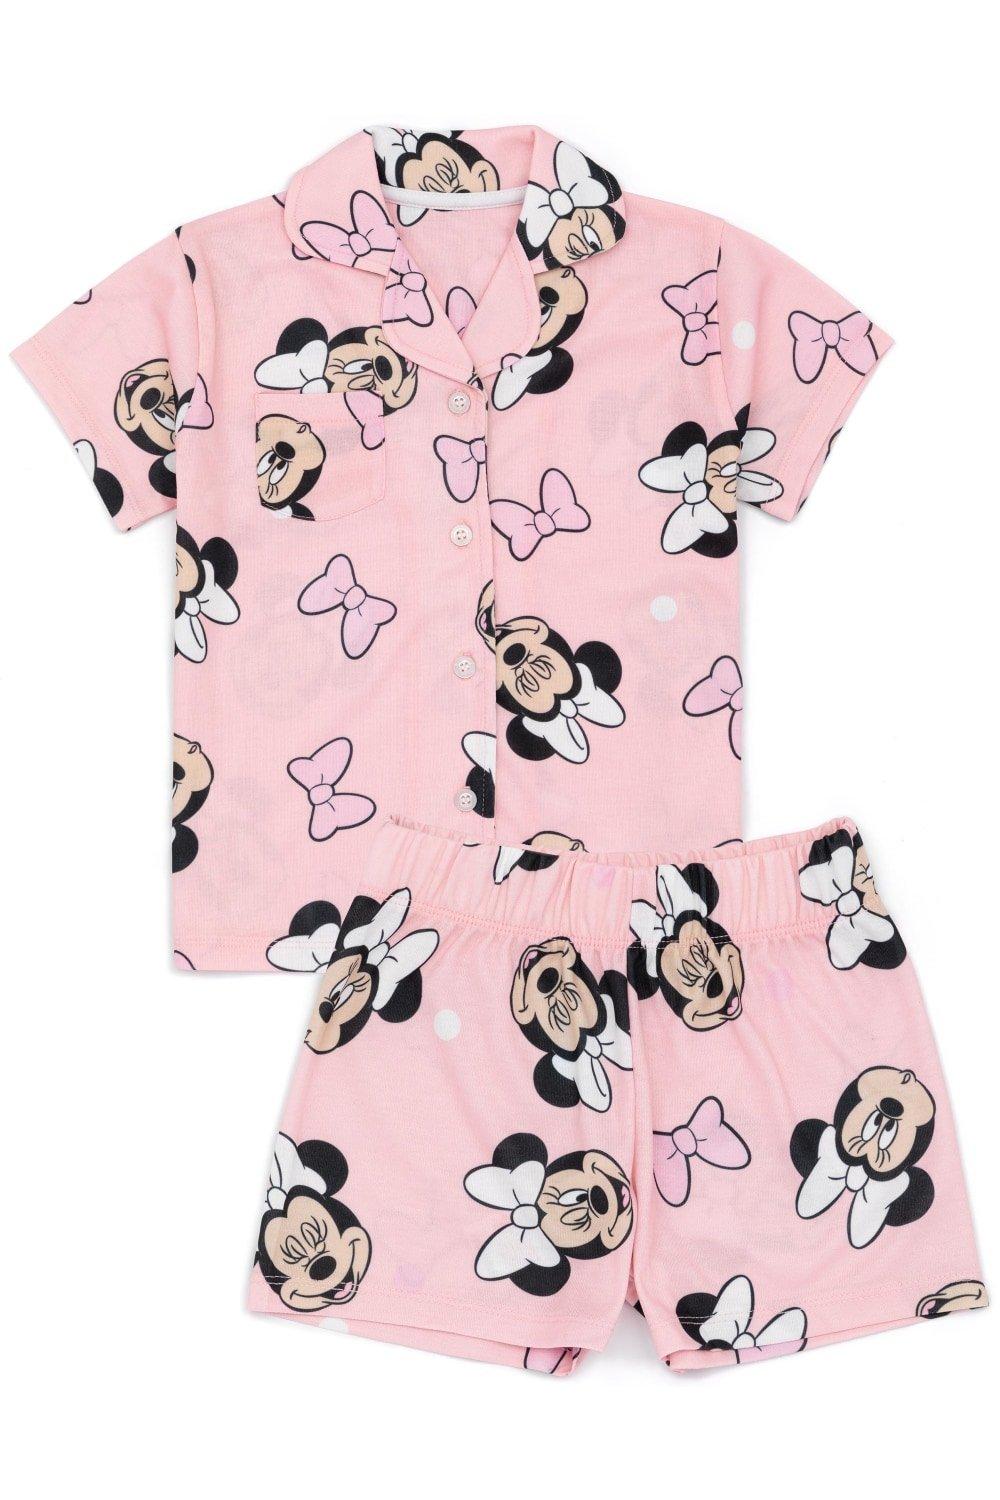 Minnie Mouse Pyjama Set